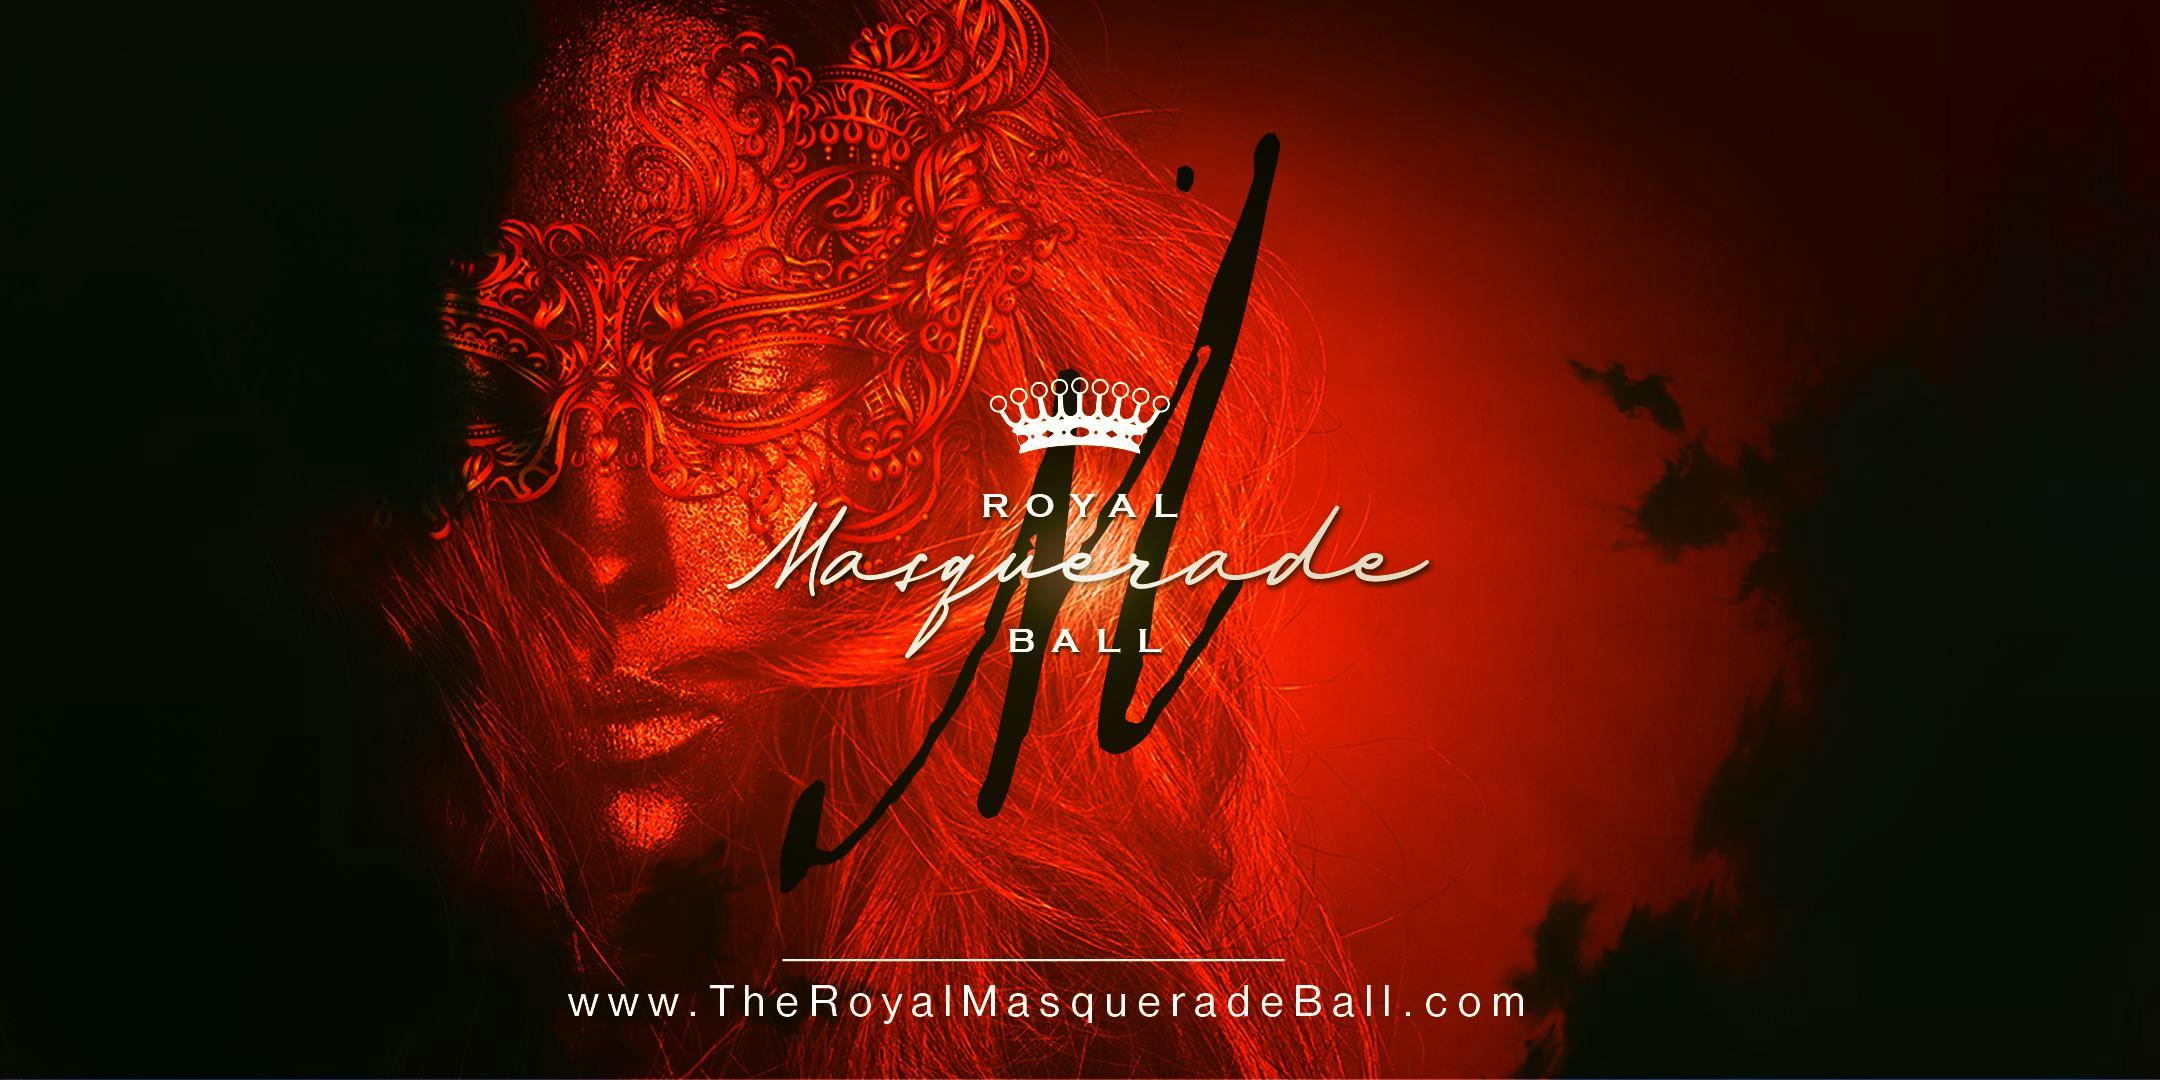 The Royal Masquerade Ball - New Years Eve